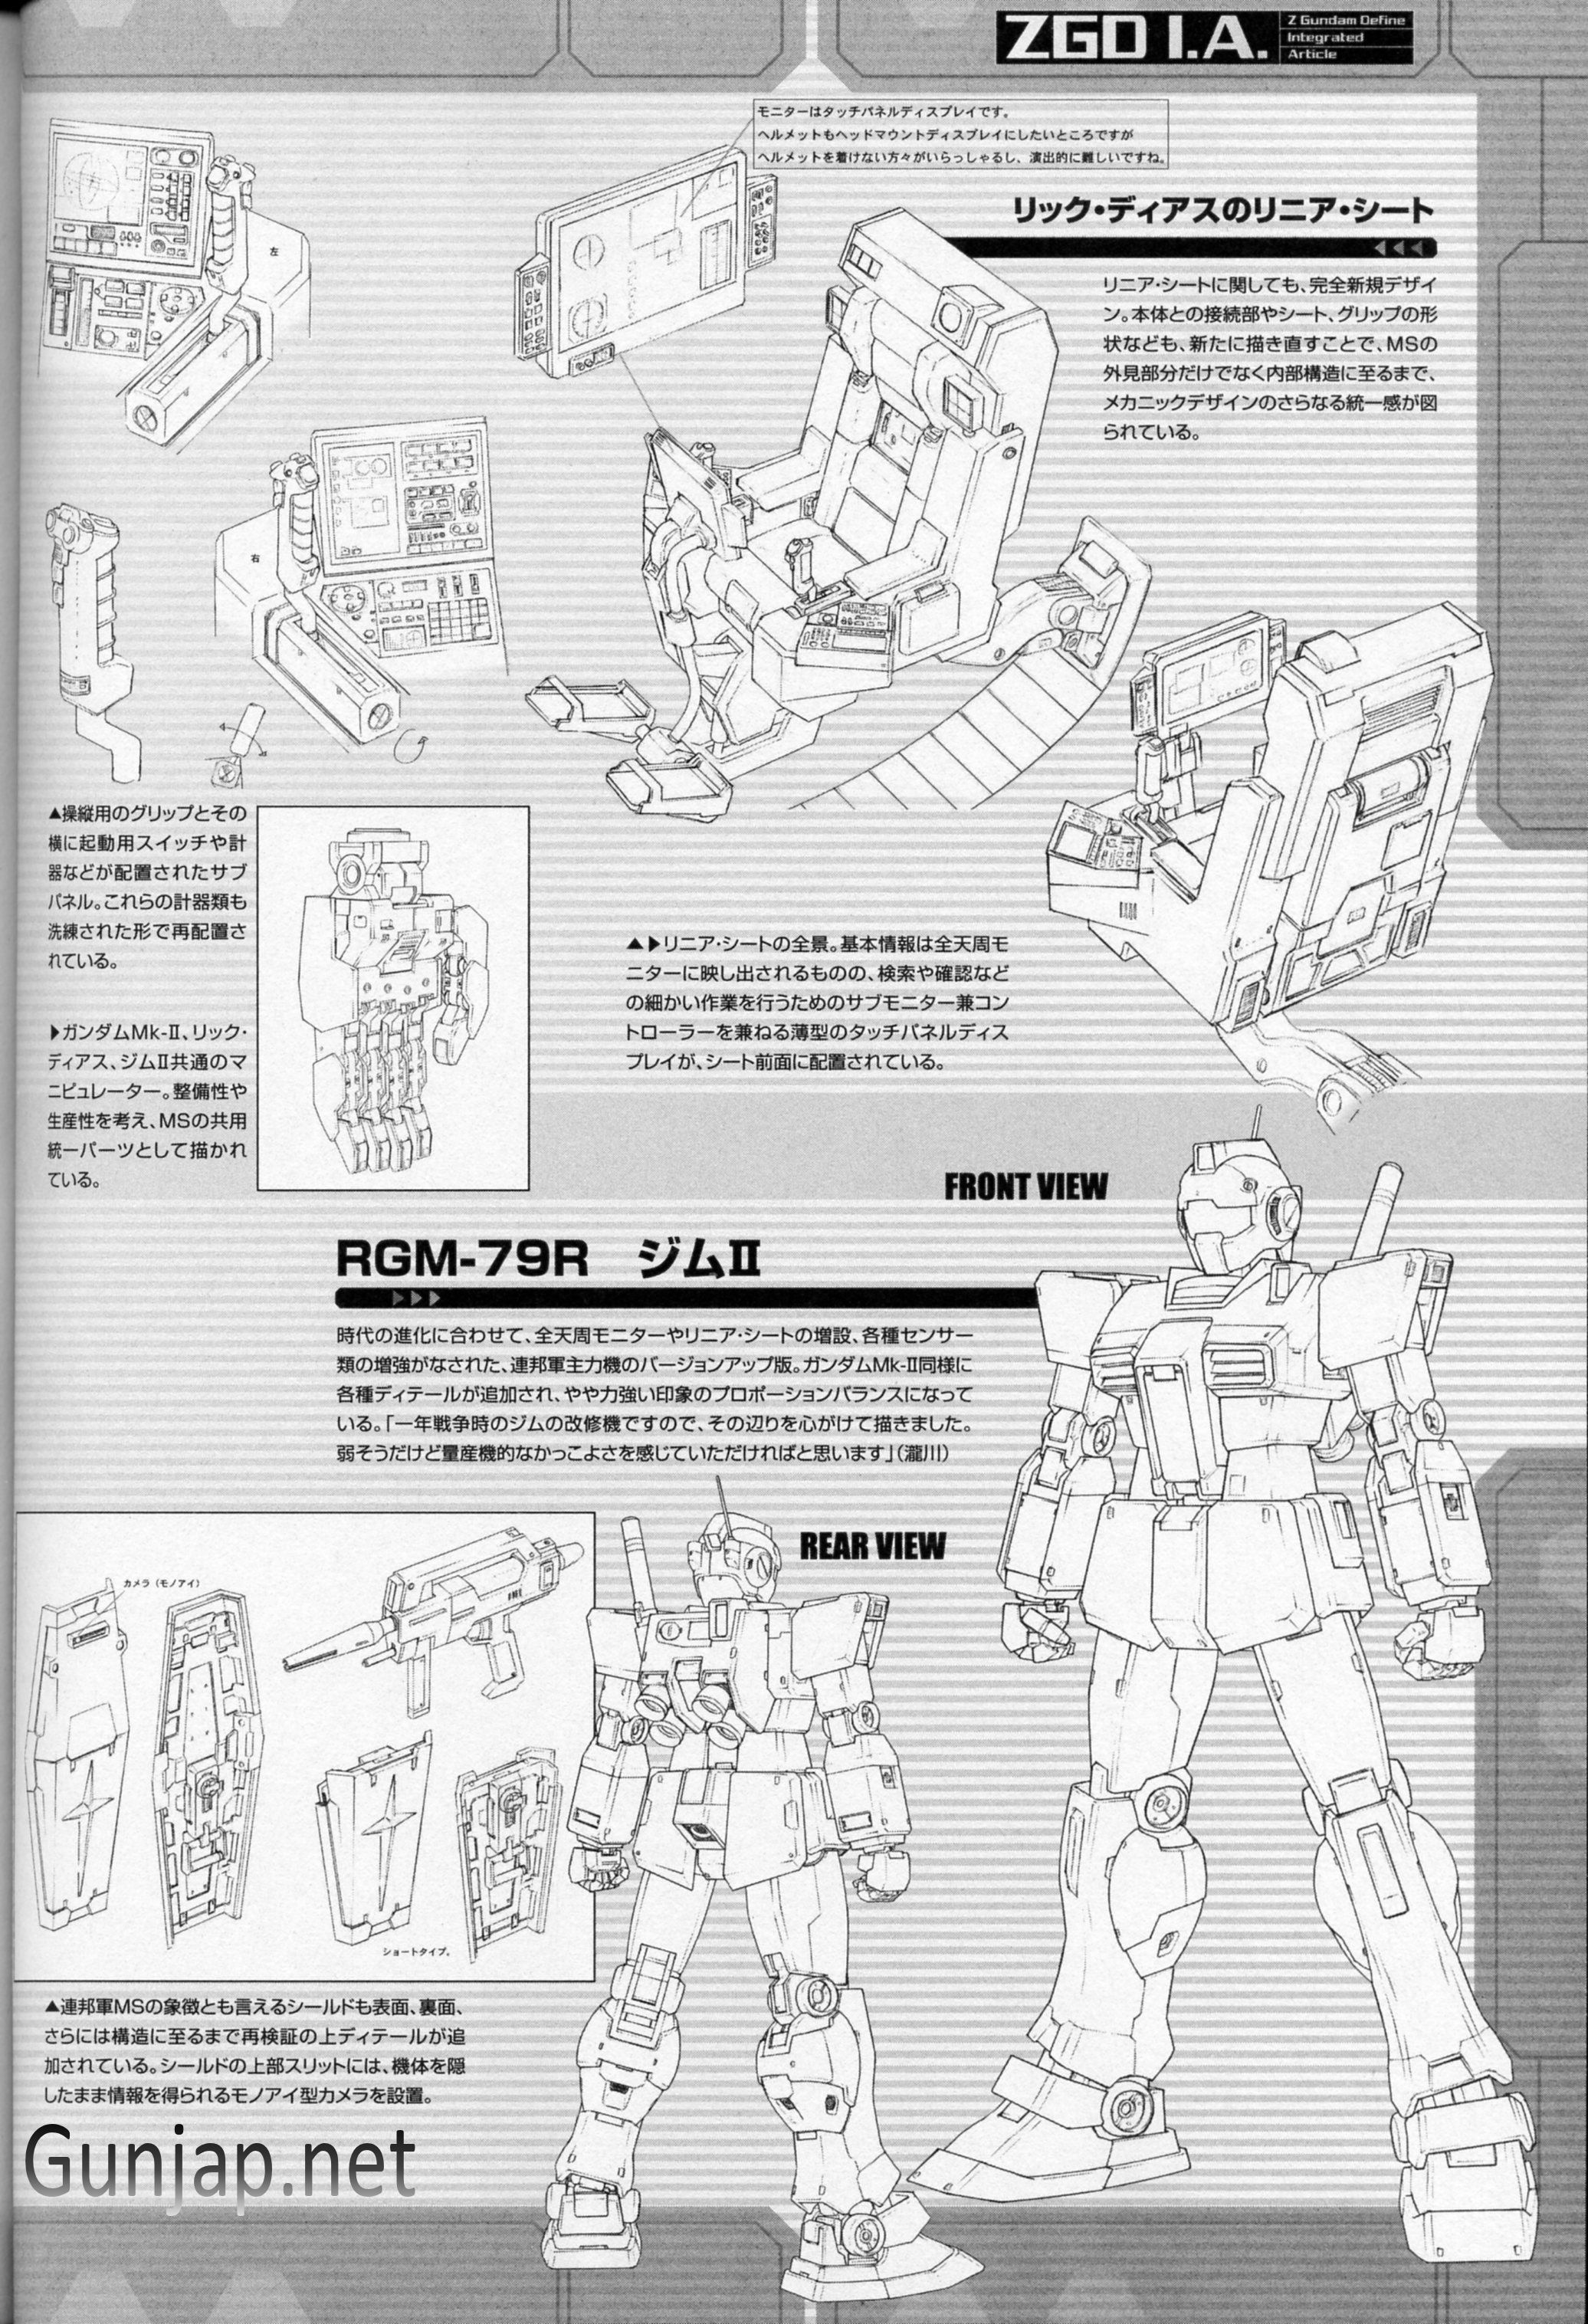 Z Gundam Define Mecha Files Hyper Size Scans 72 3032 Gunjap